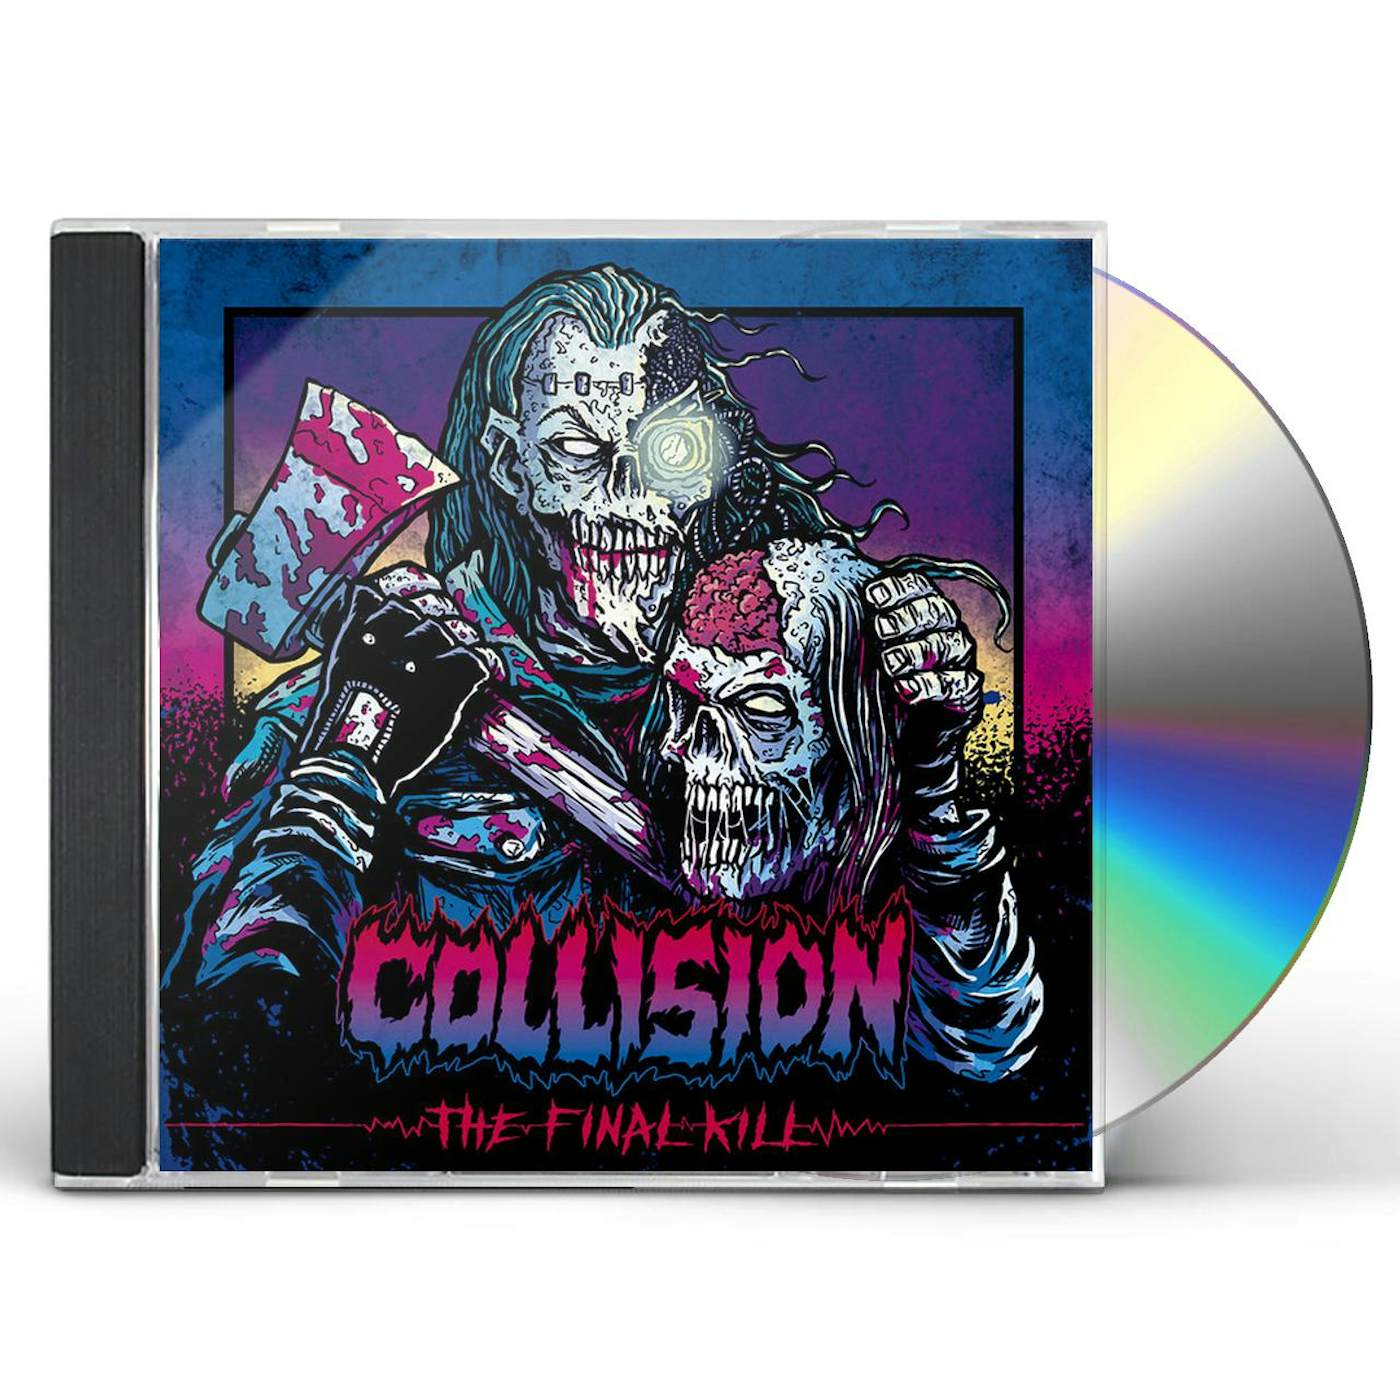 The Collision FINAL KILL CD